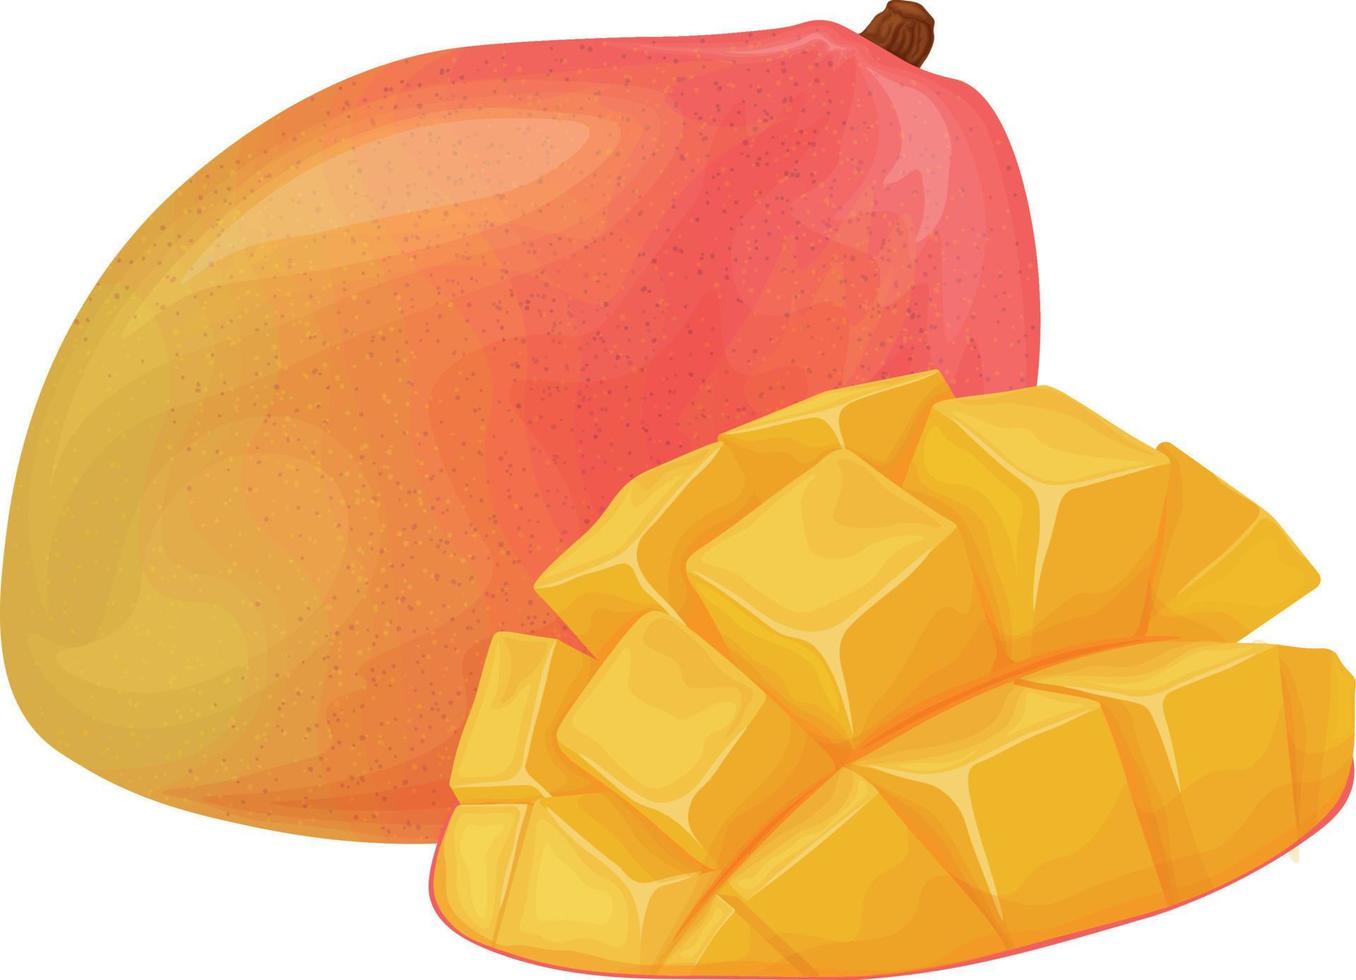 Mango. Ripe mango. Tropical fruit. Vitamin vegetarian product. Vector illustration isolated on a white background